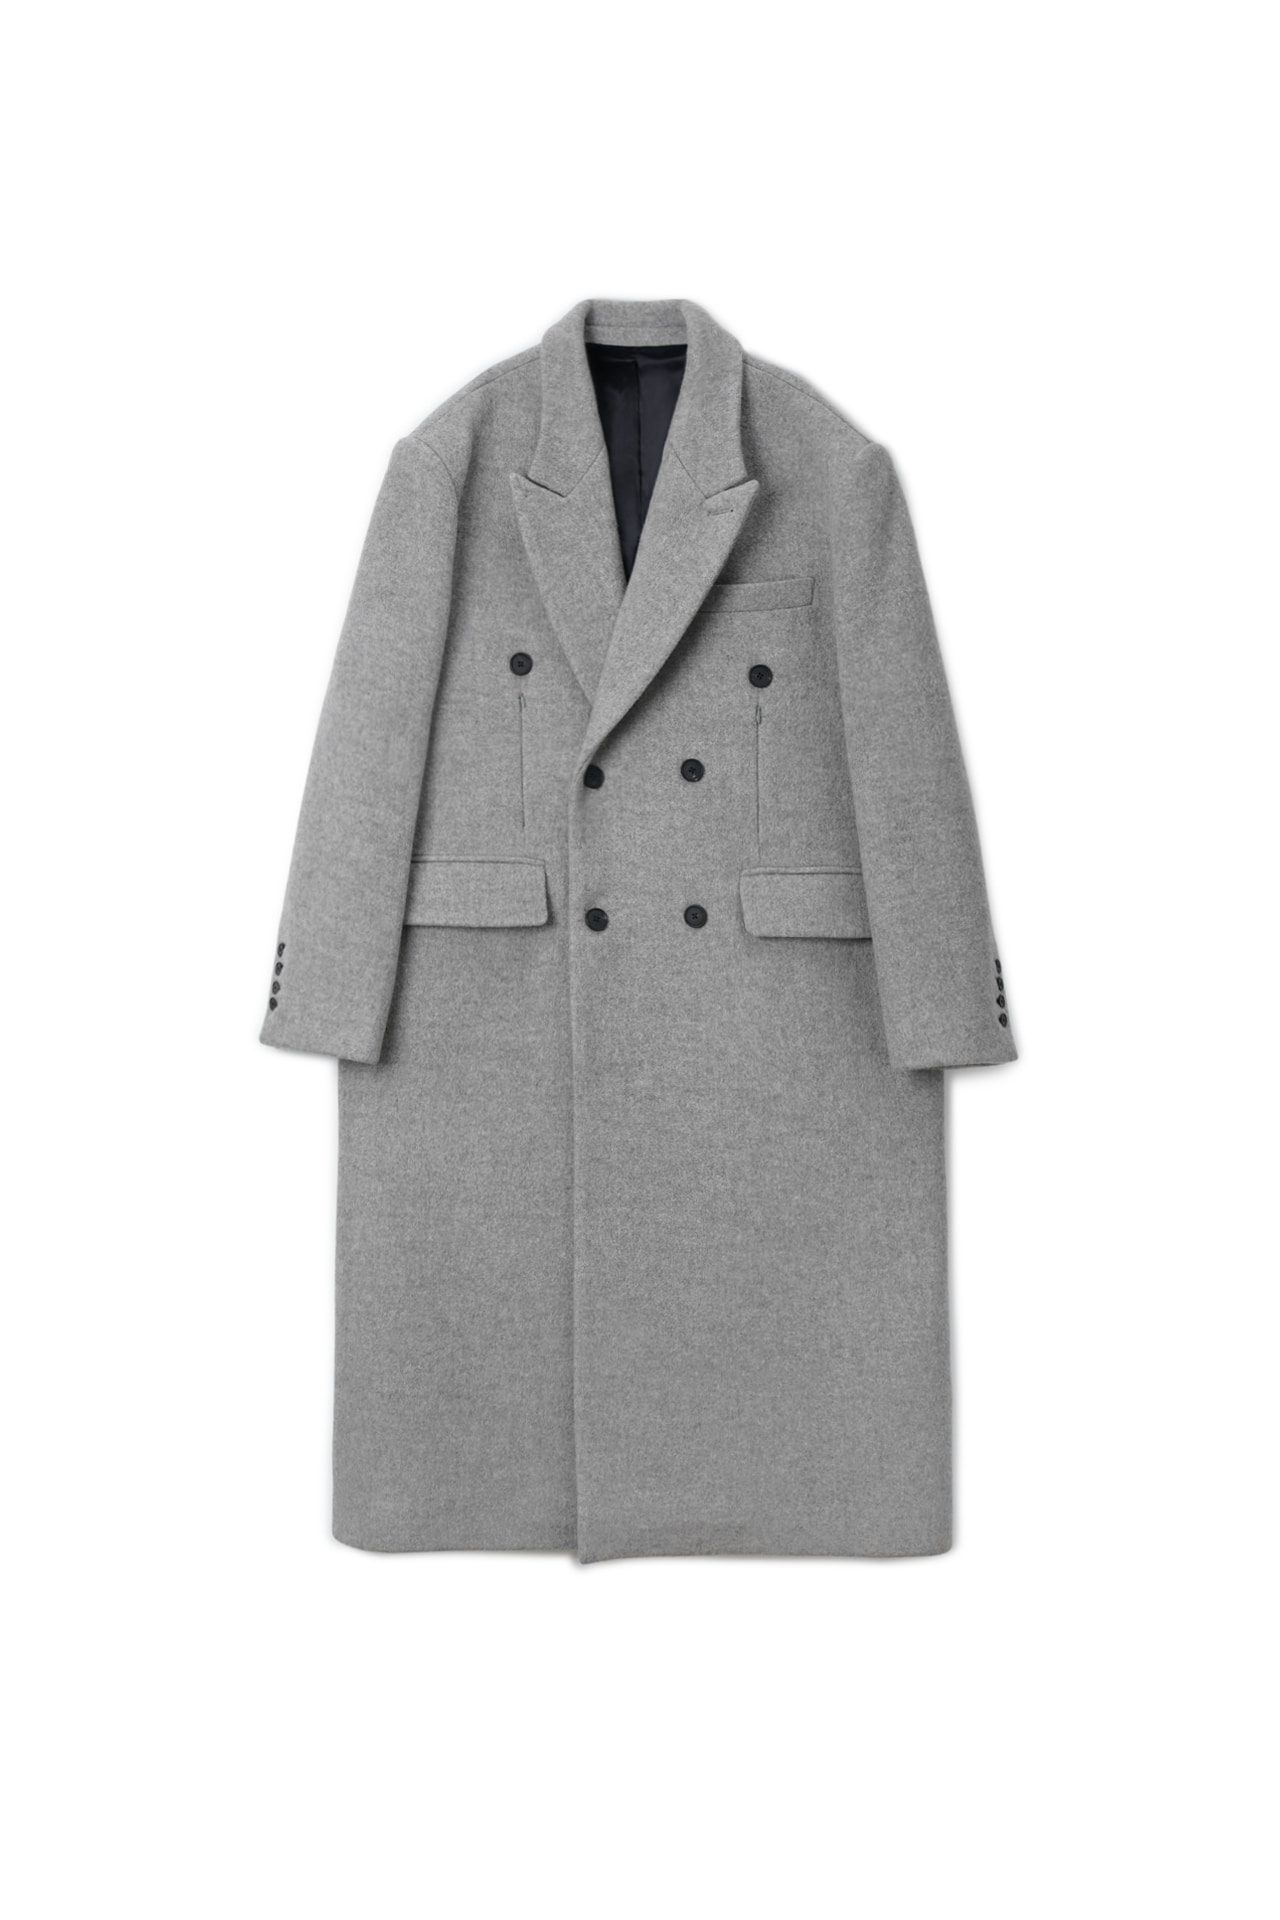 Dart Pocket Double Coat Grey (12월 14일 순차 발송)